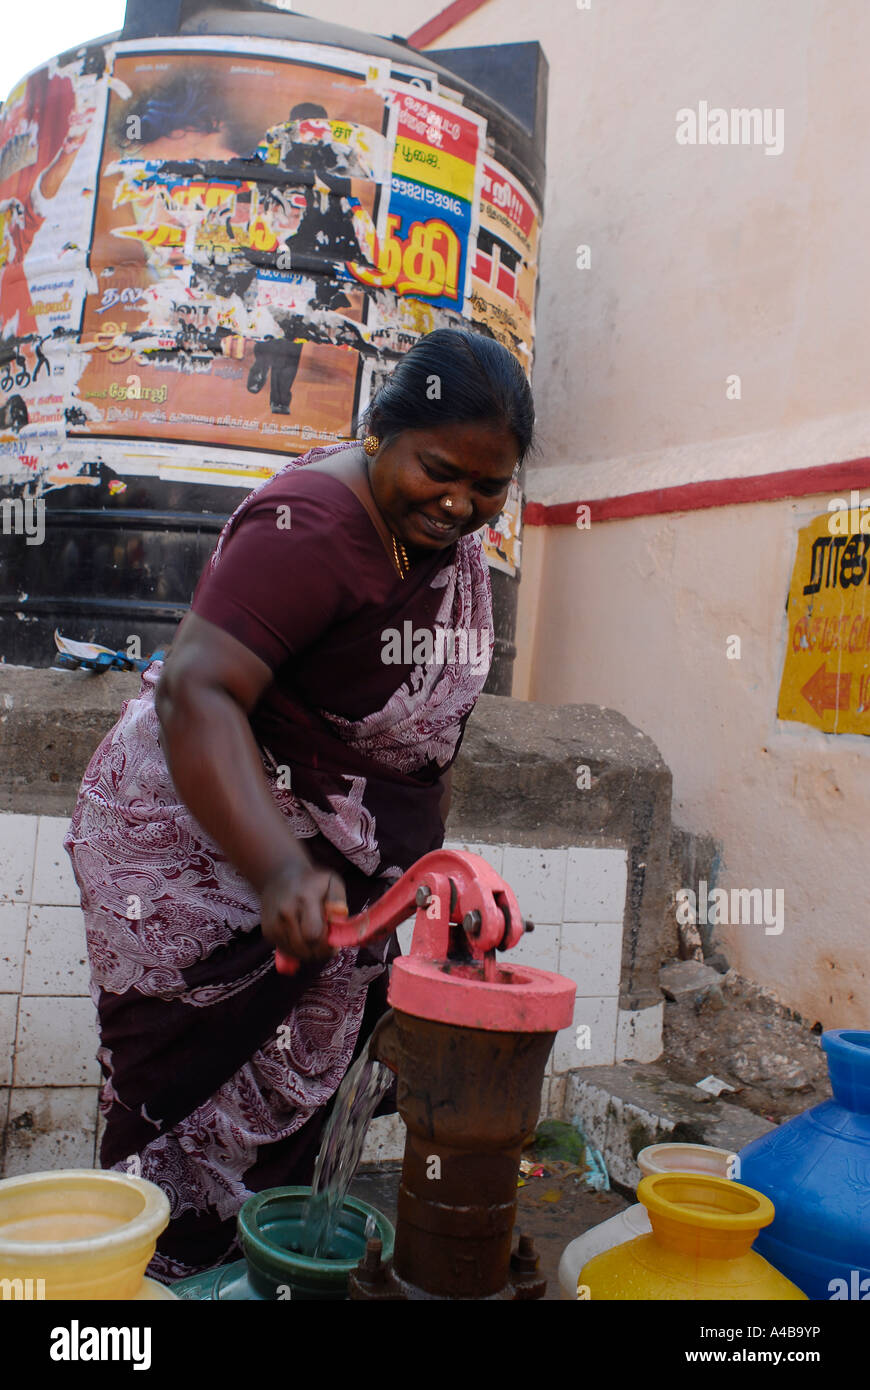 Stock Image of Dalit Women at communal community well in Jagathapuram slum in Chennai Tamil Nadu India Stock Photo